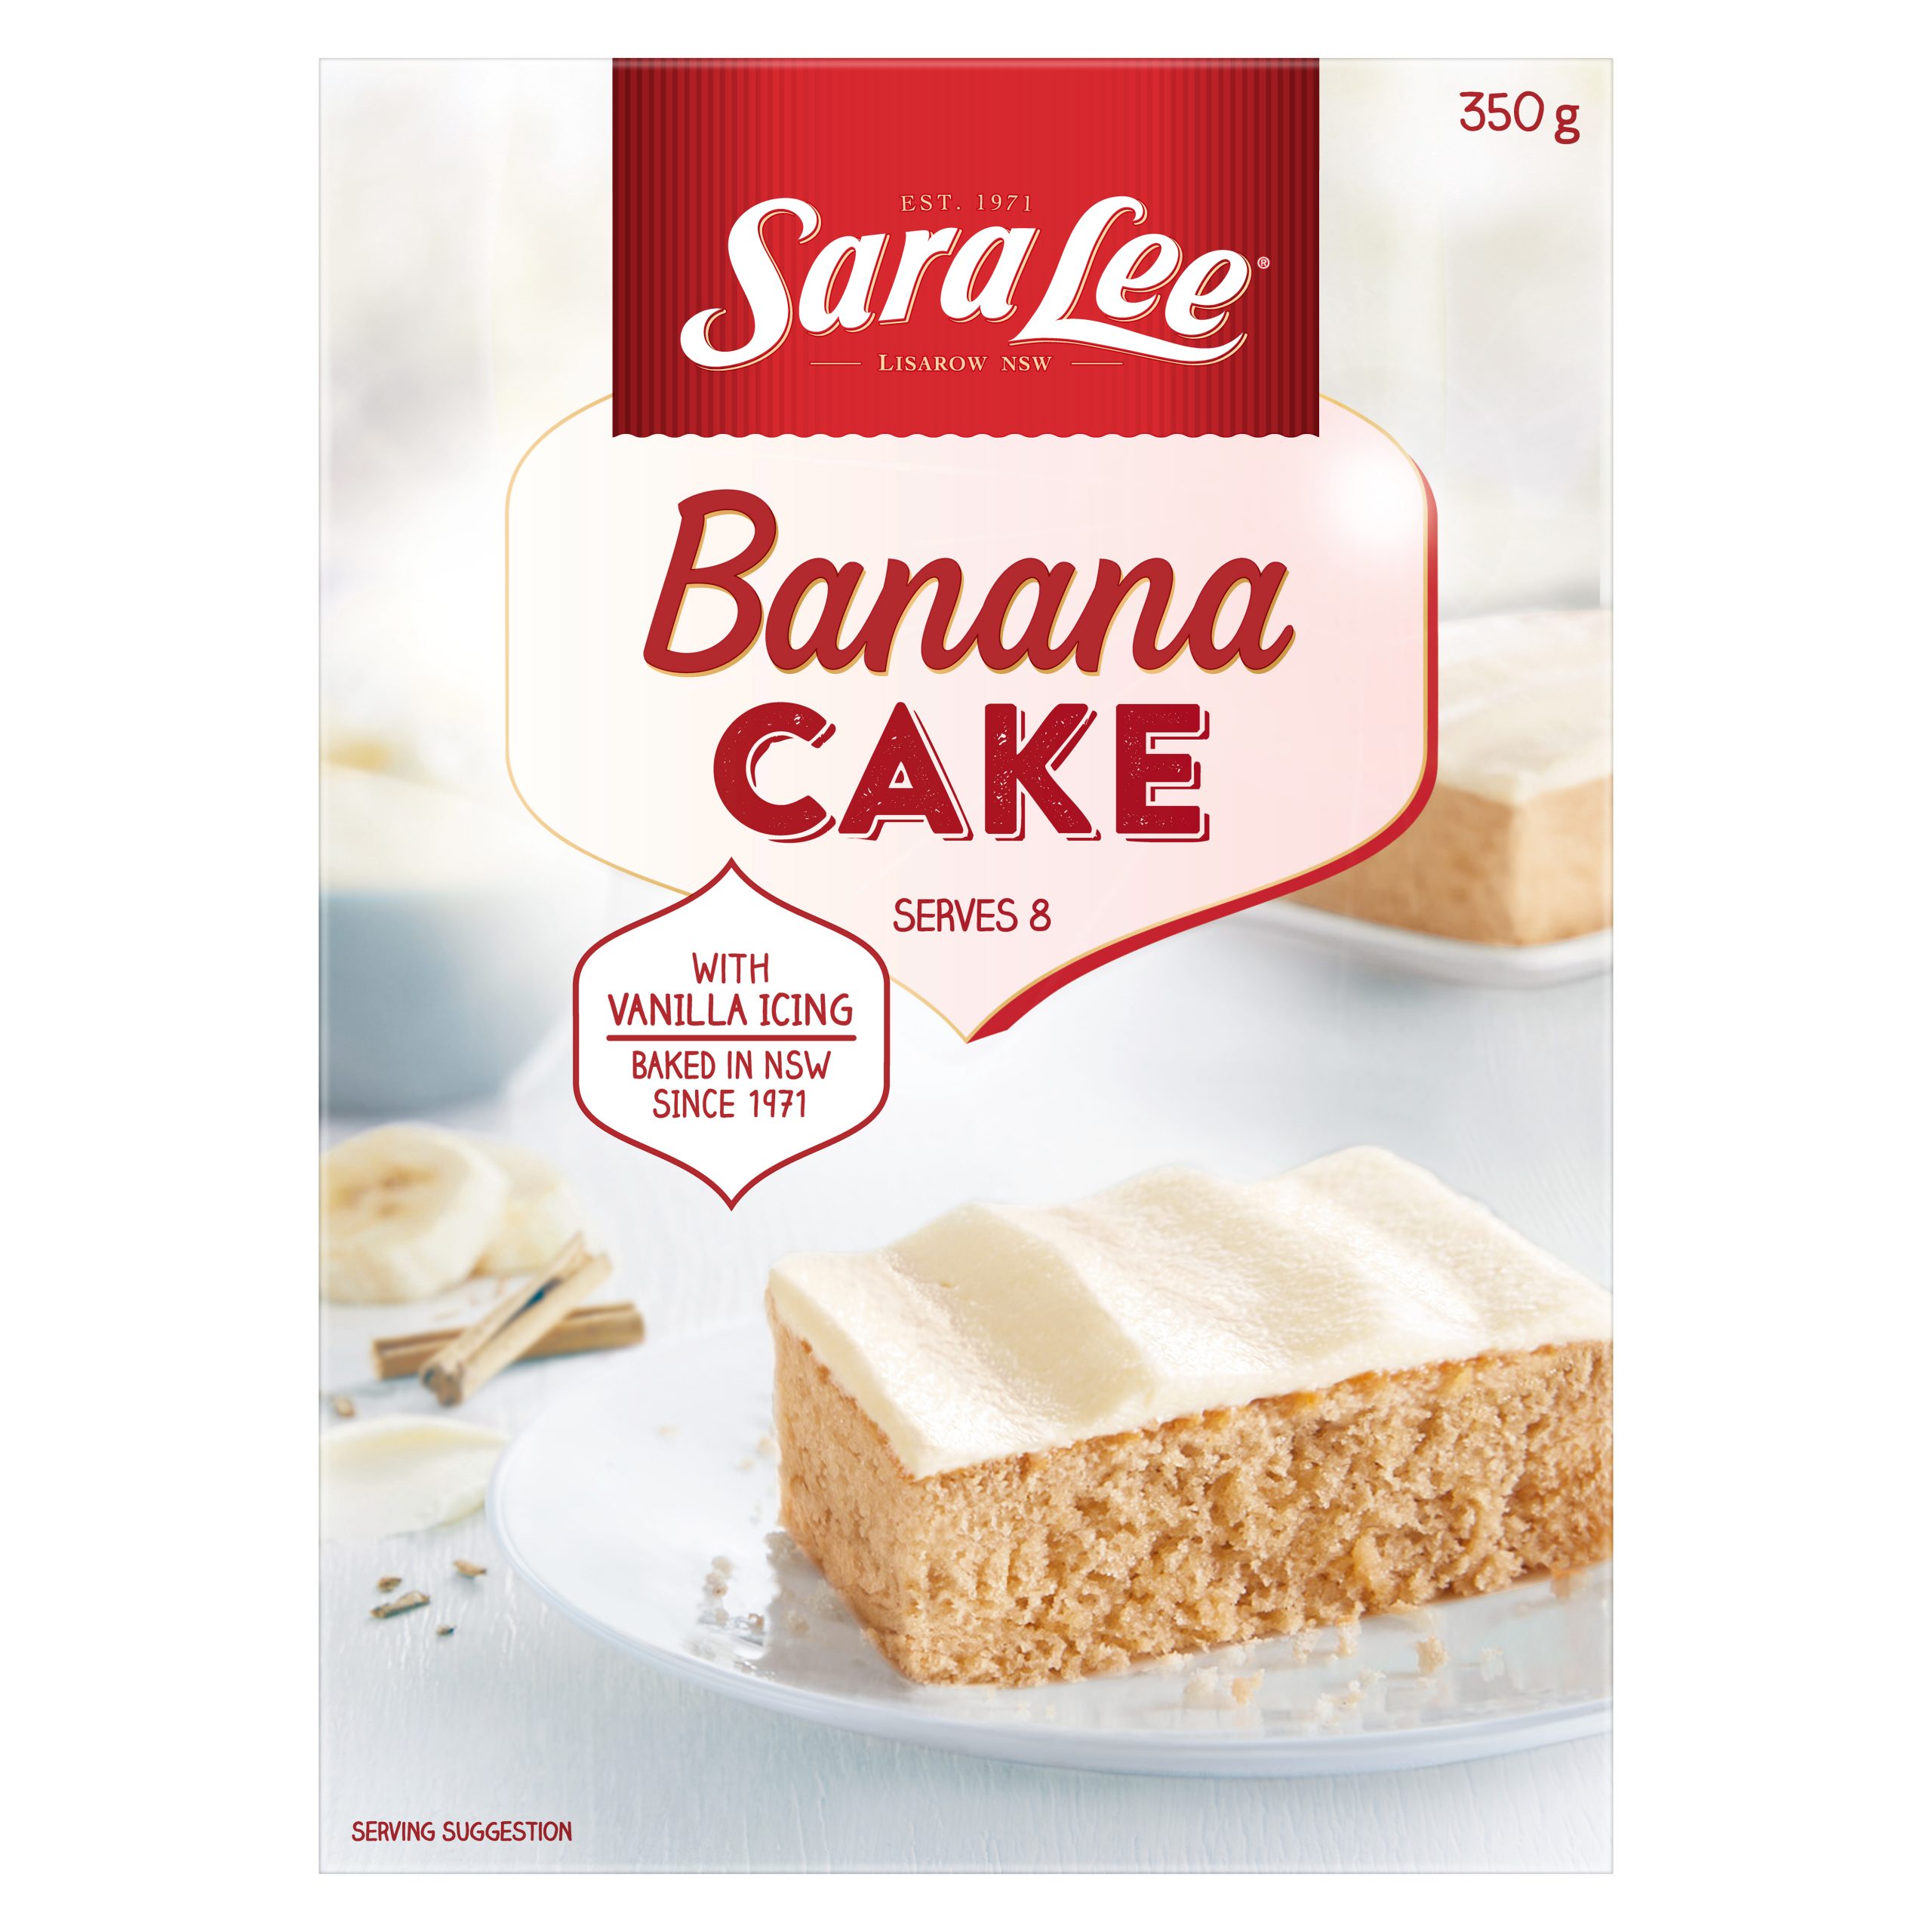 Sara Lee Banana Cake returns to shelves - Retail World Magazine